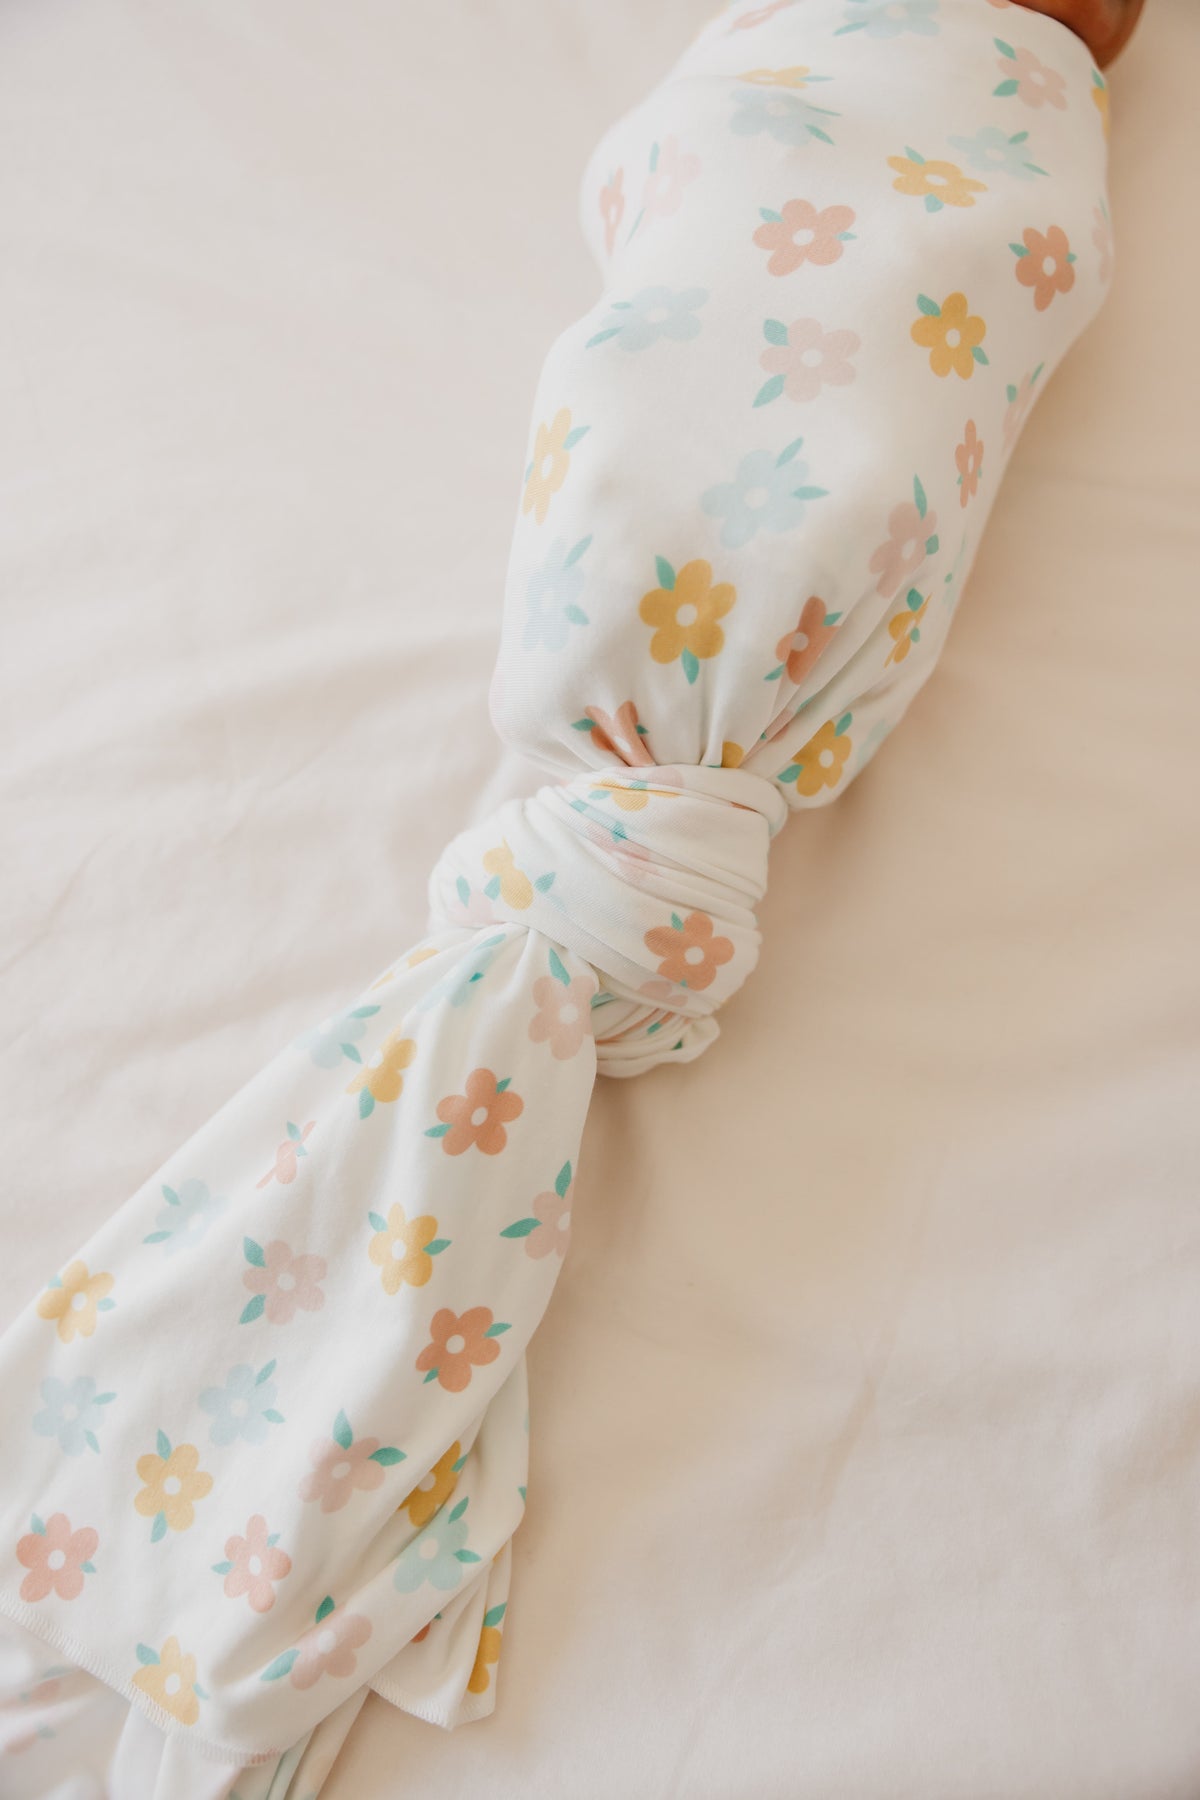 Knit Swaddle Blanket - Daisy